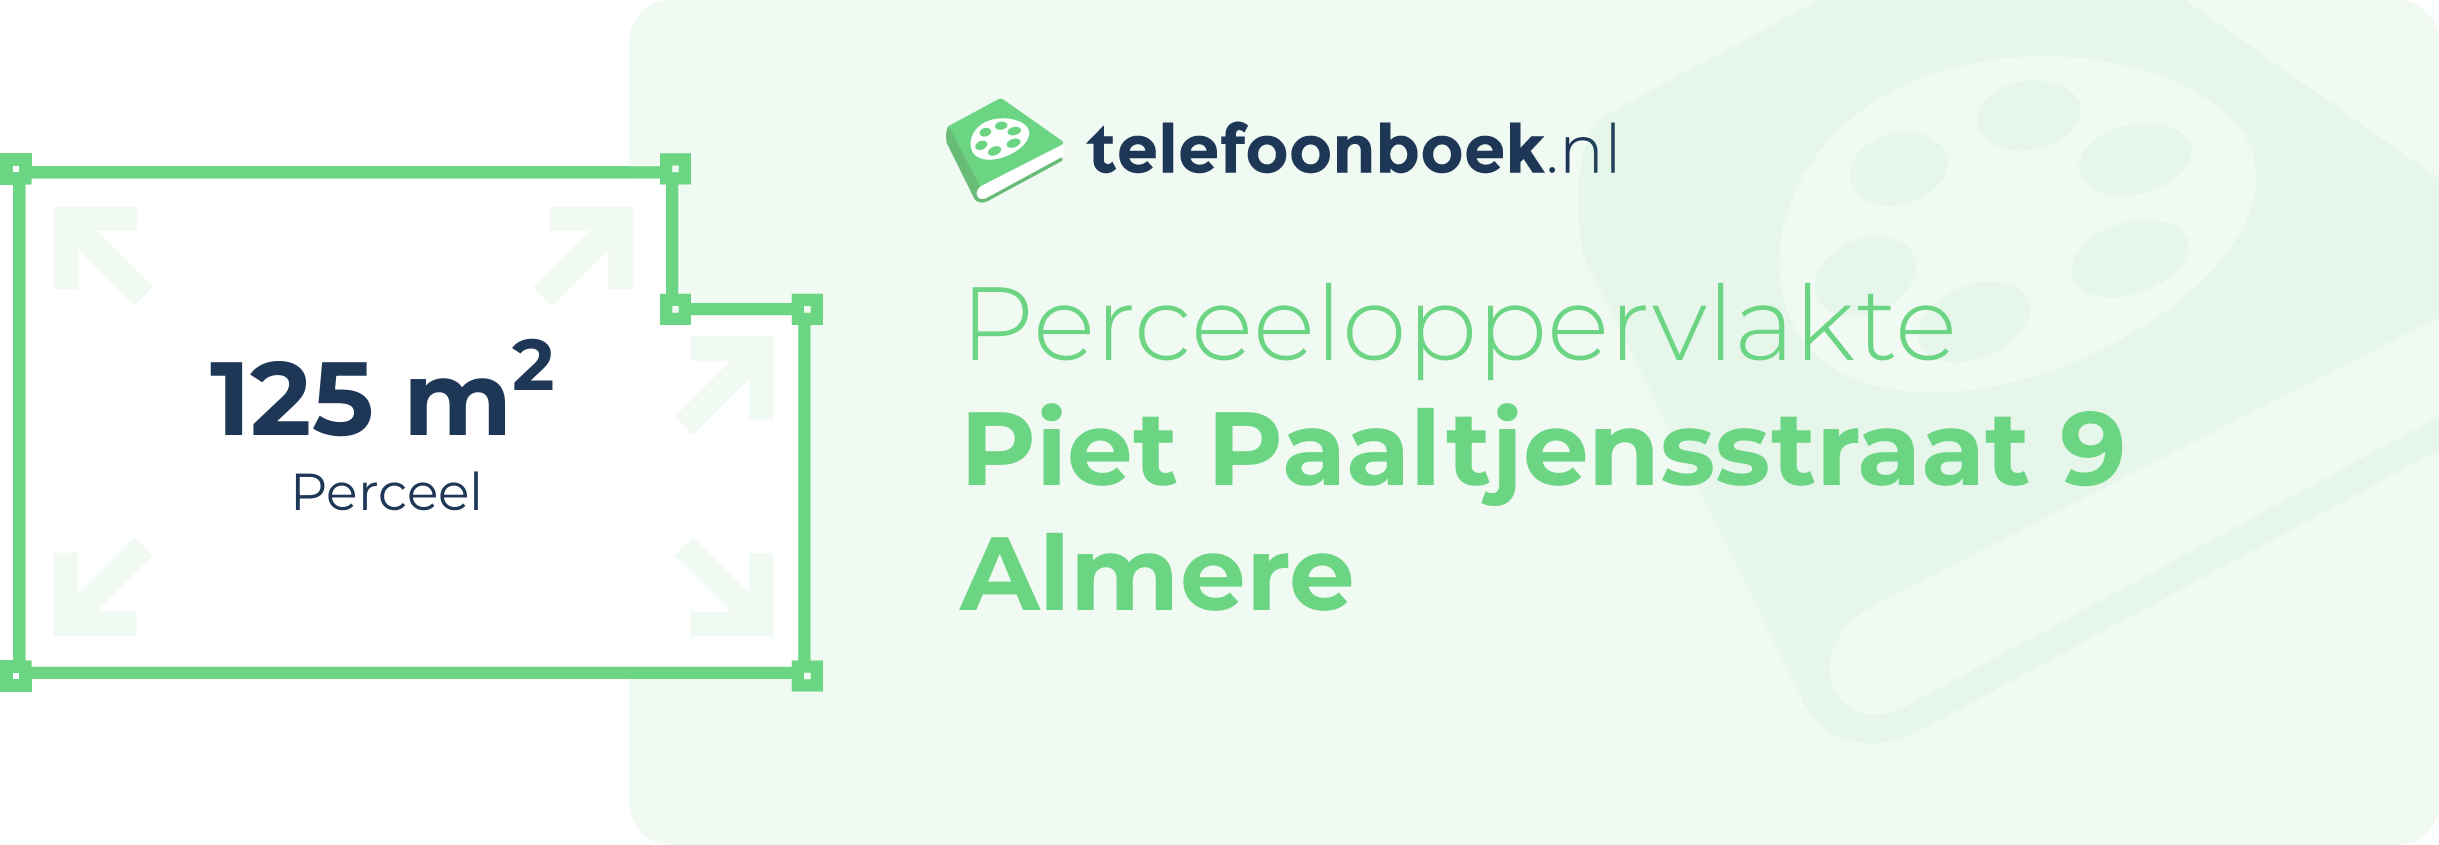 Perceeloppervlakte Piet Paaltjensstraat 9 Almere